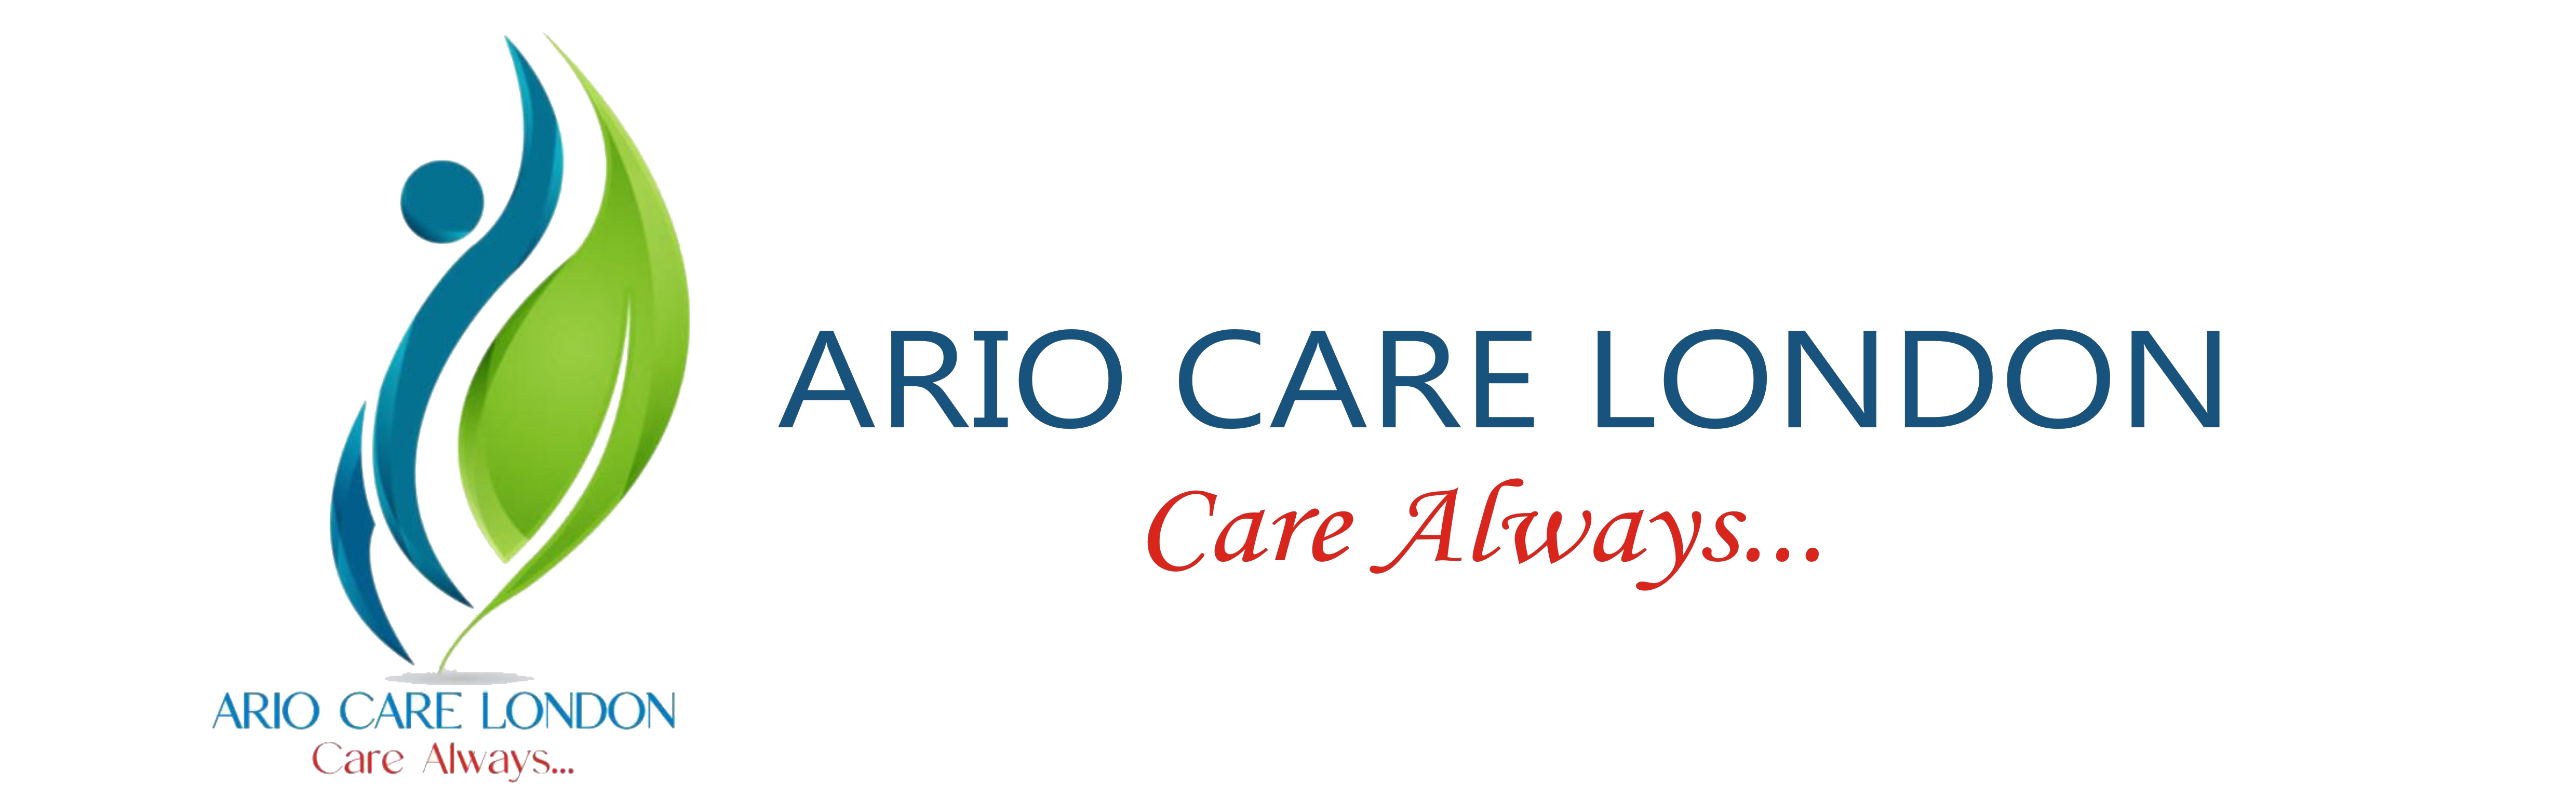 Ario Care London